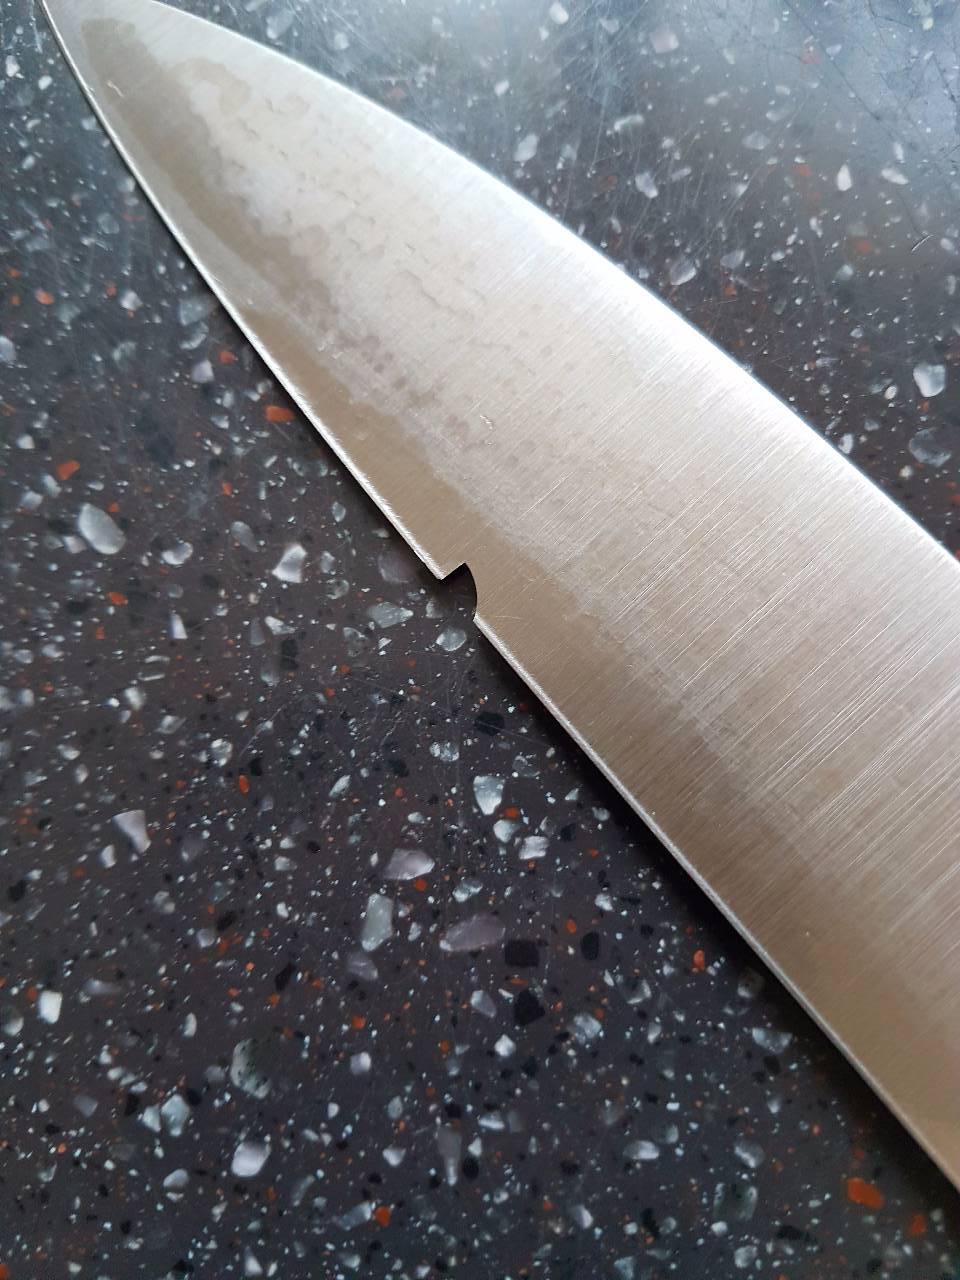 Заточка кухонных ножей